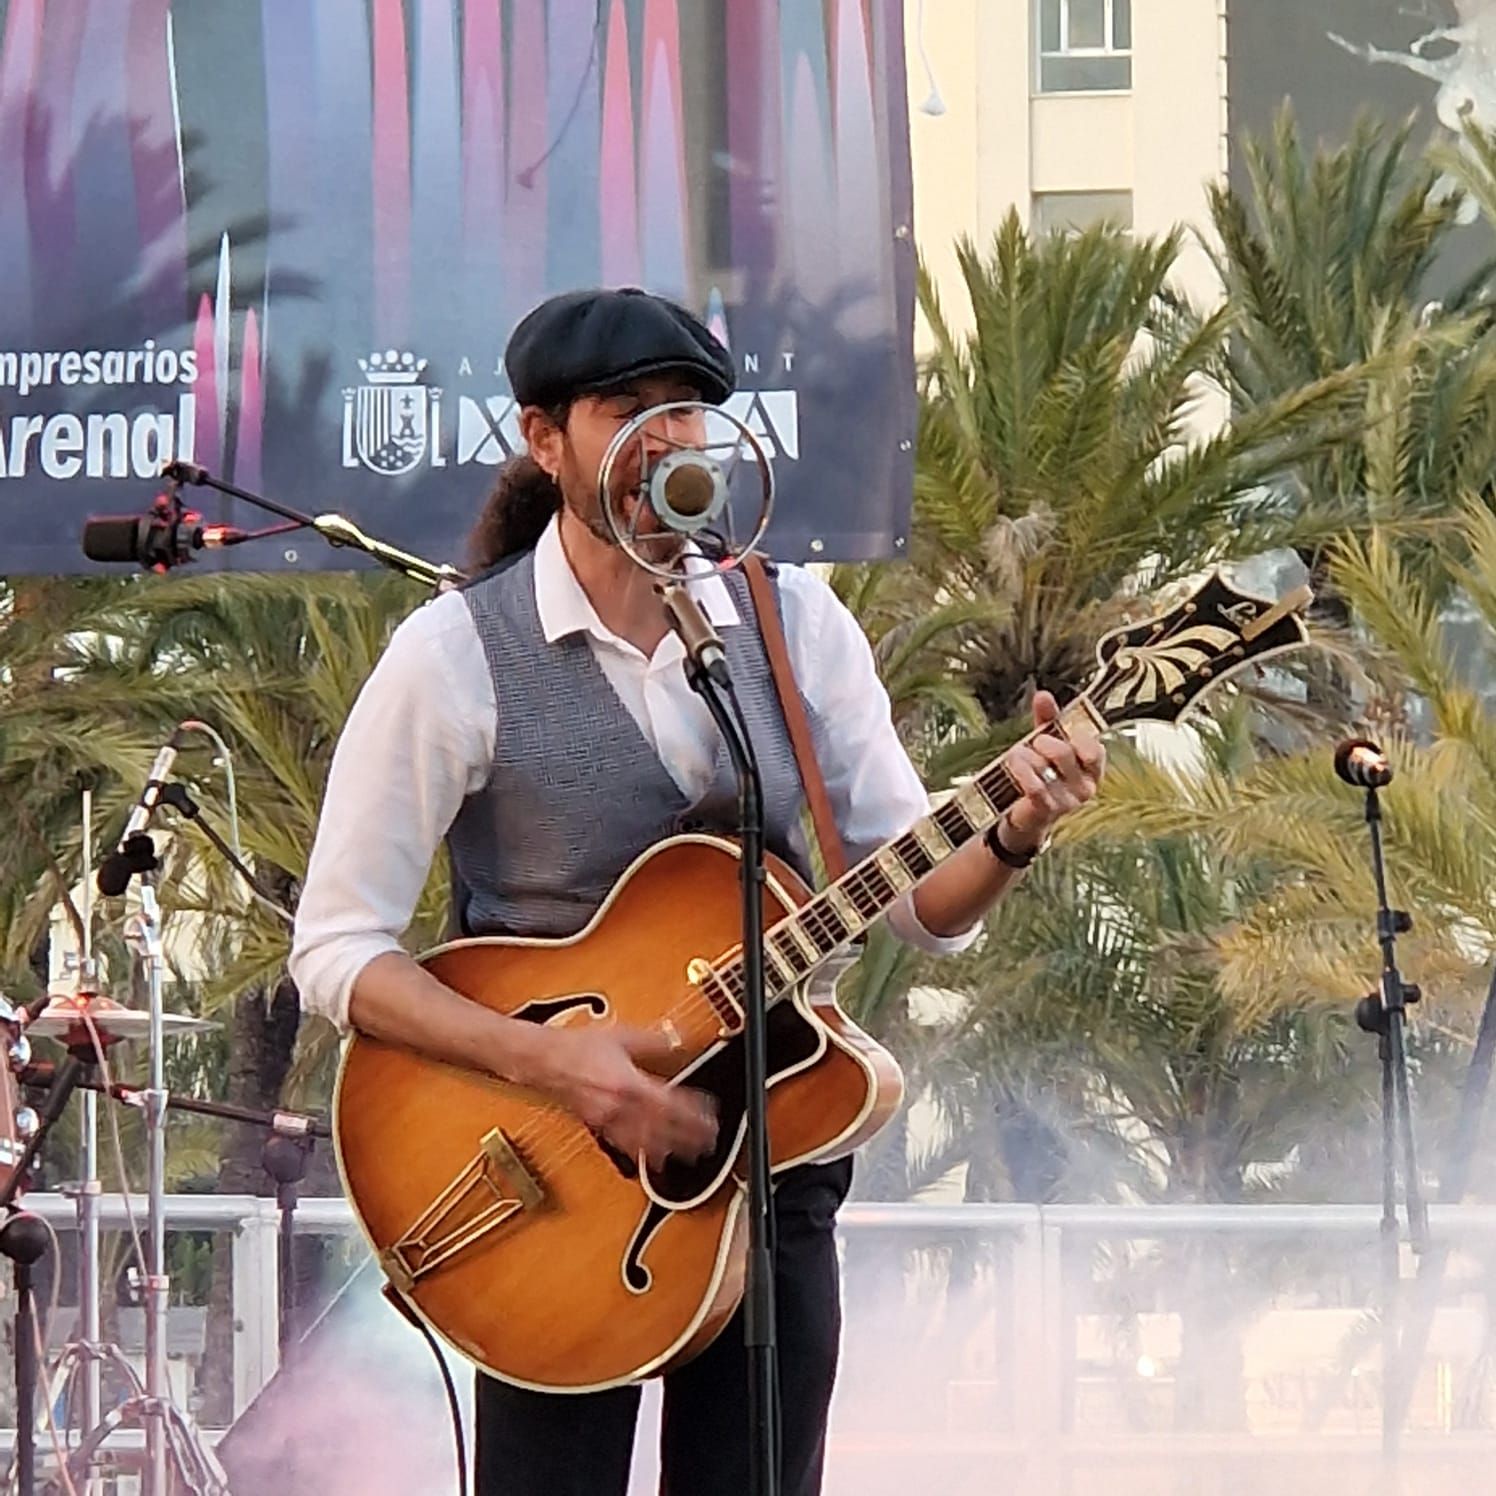 Xàbia vibra con el mejor blues: el Arenal Blues en imágenes